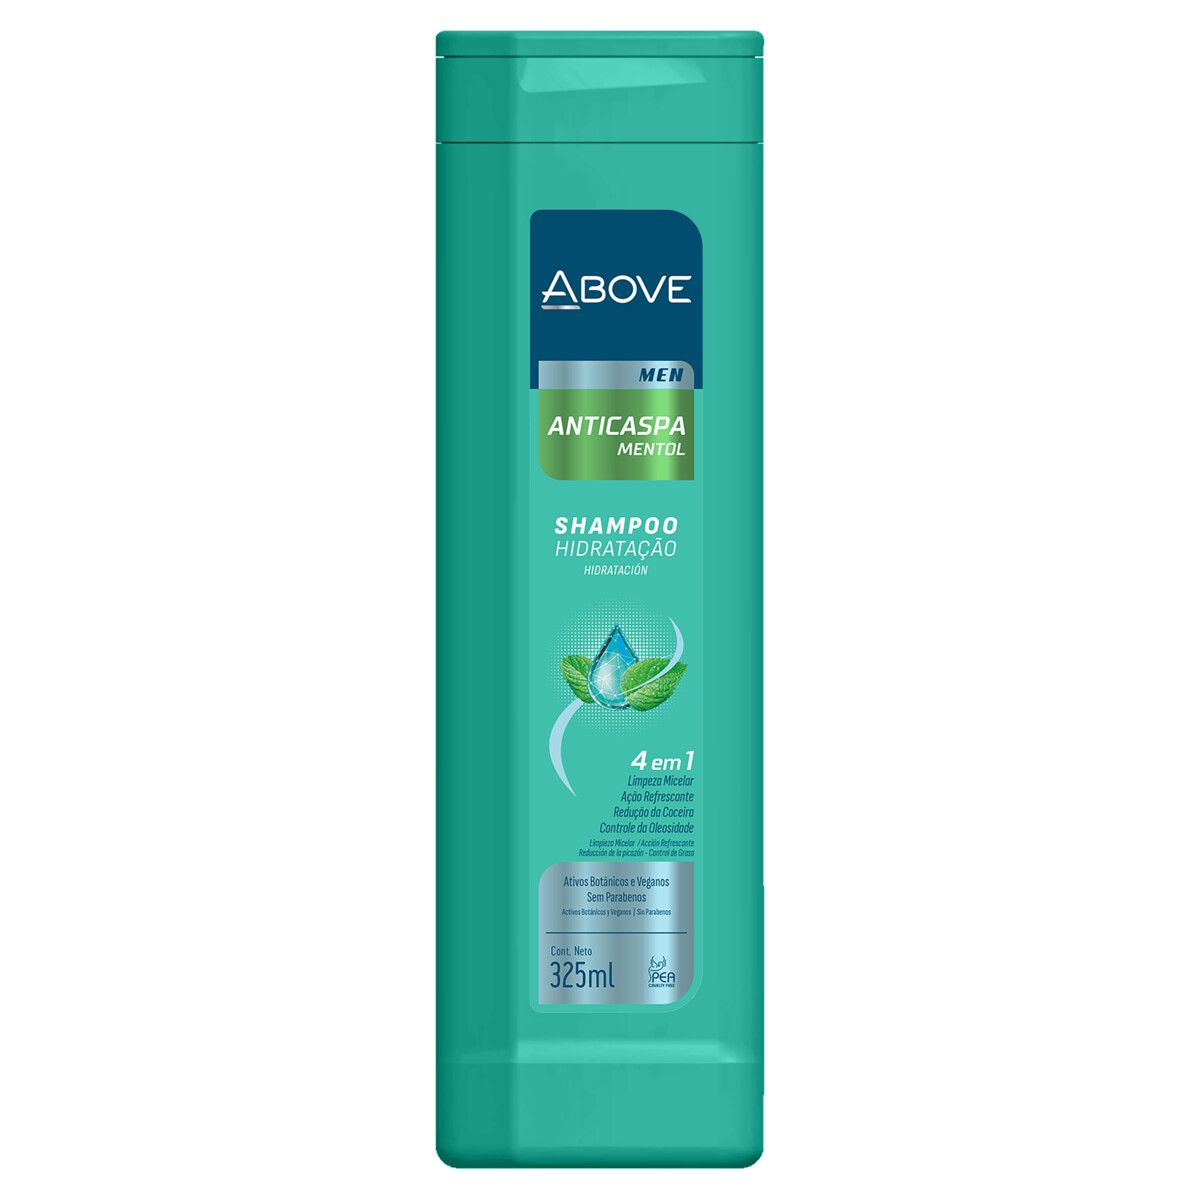 Shampoo Anticaspa Mentol Above Men Frasco 325ml